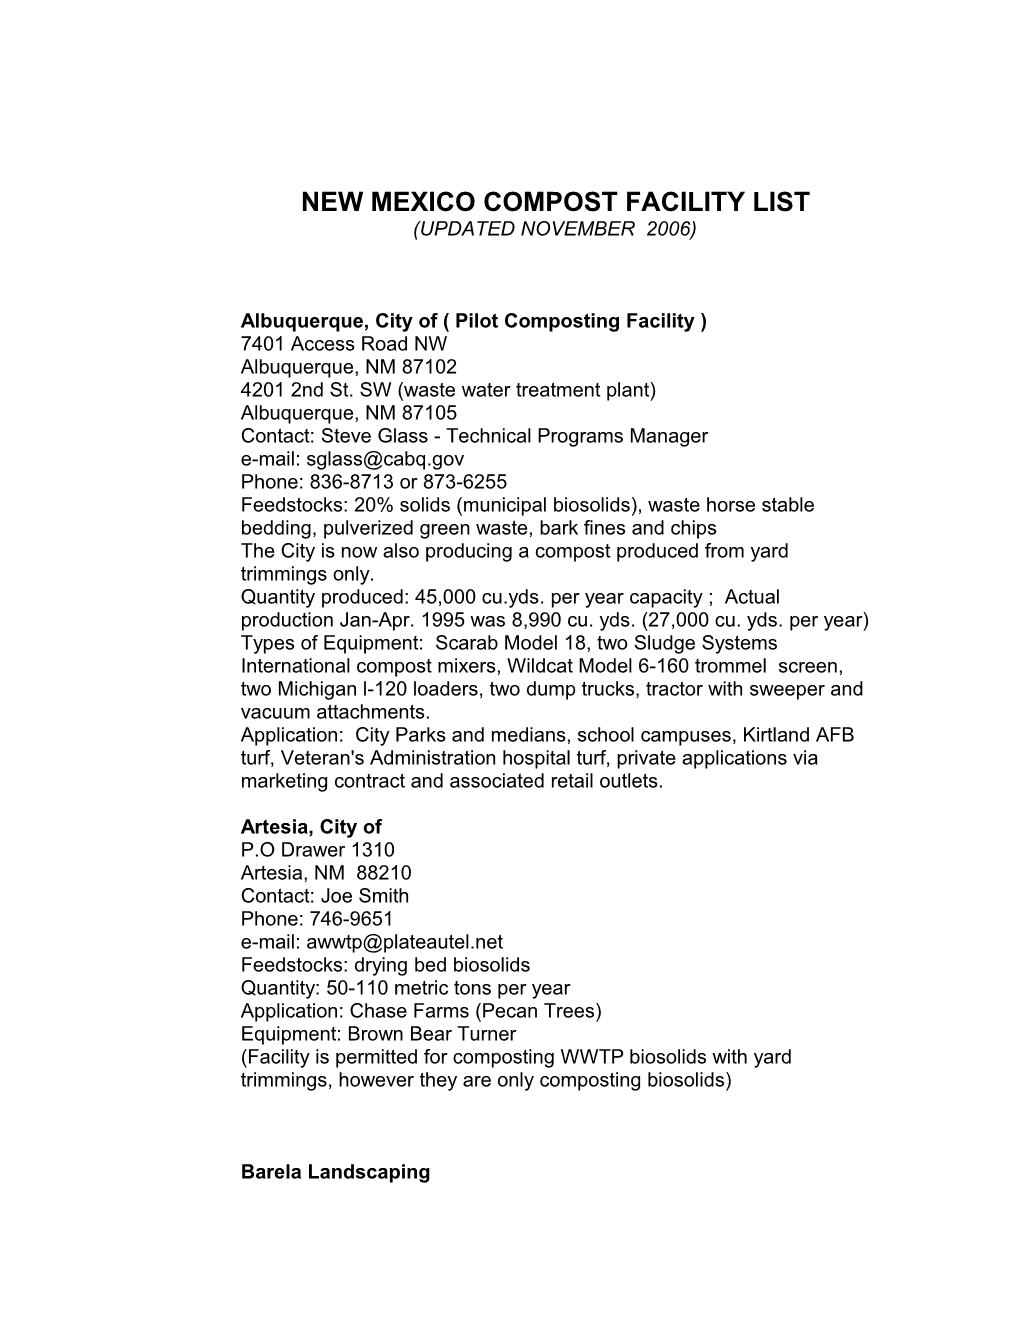 New Mexico Compost Facility List